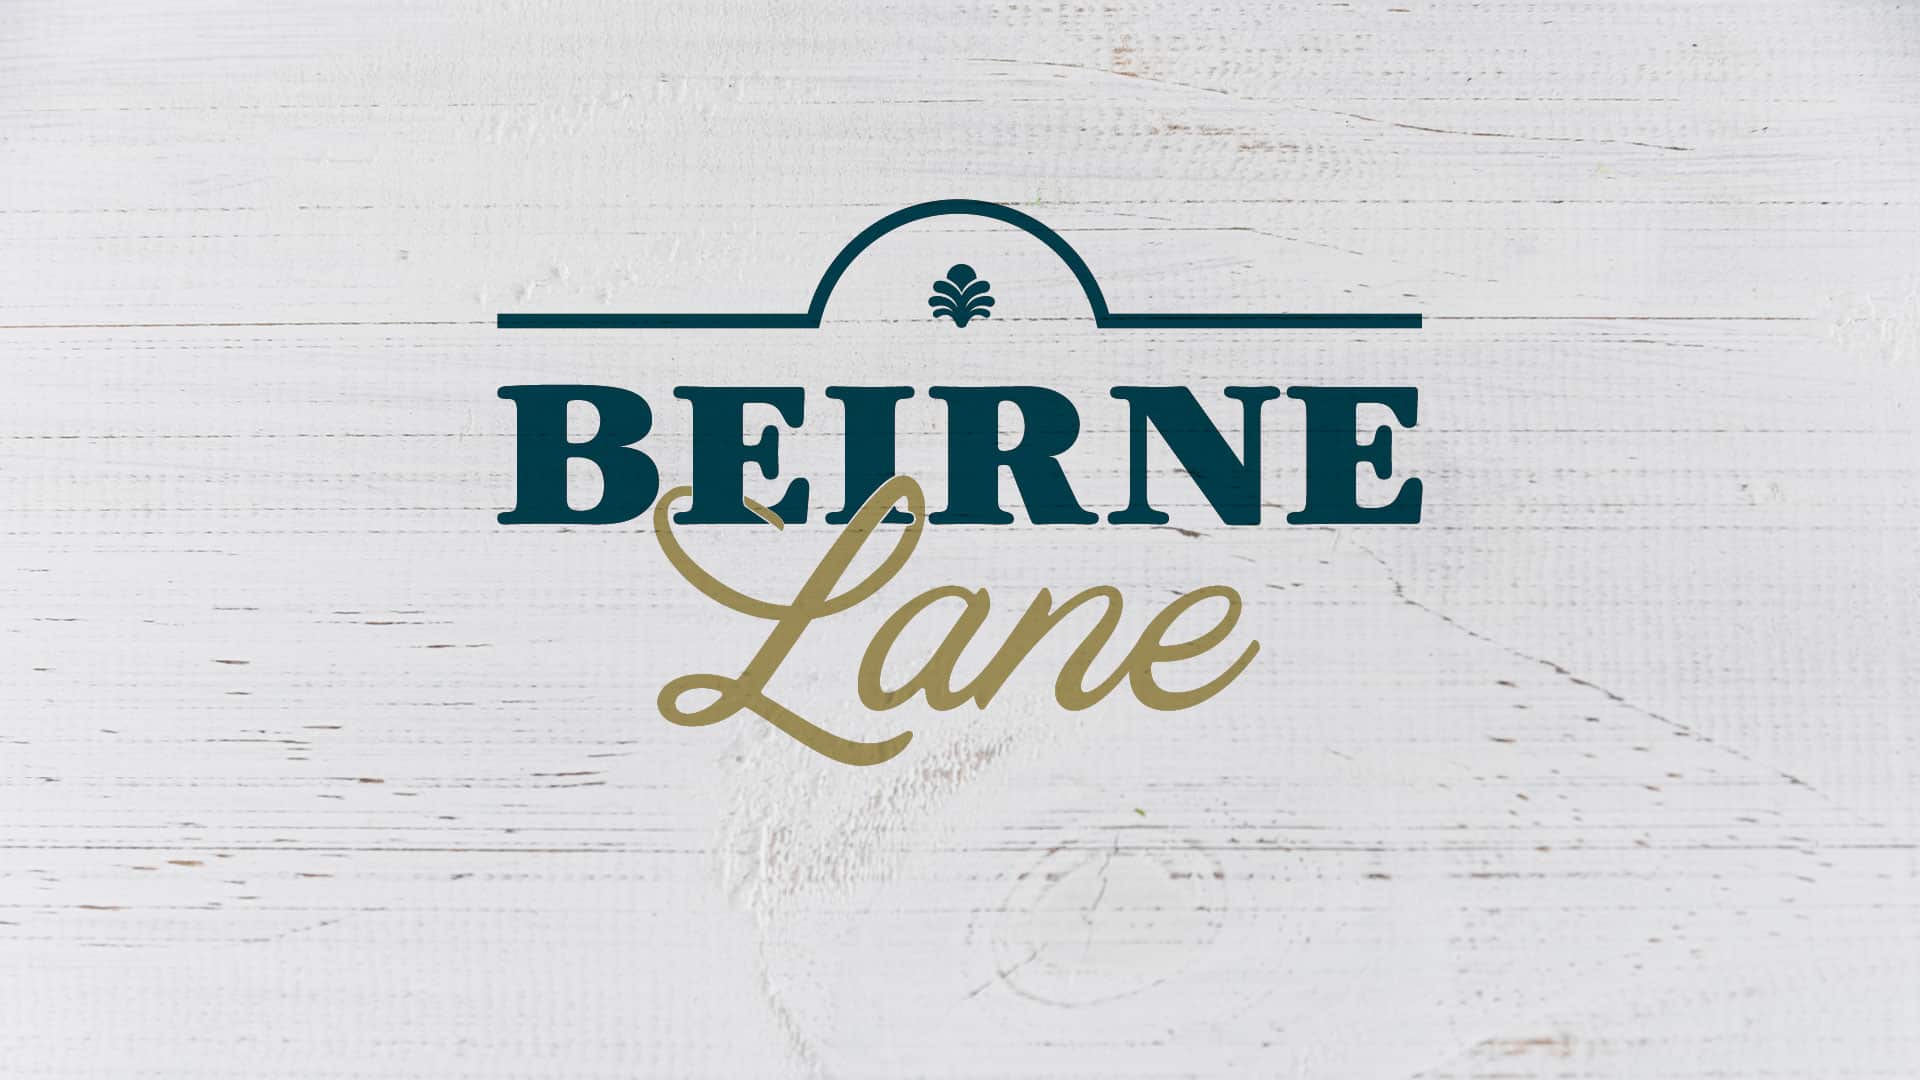 Beirne Lane - Graphic design and brand identity